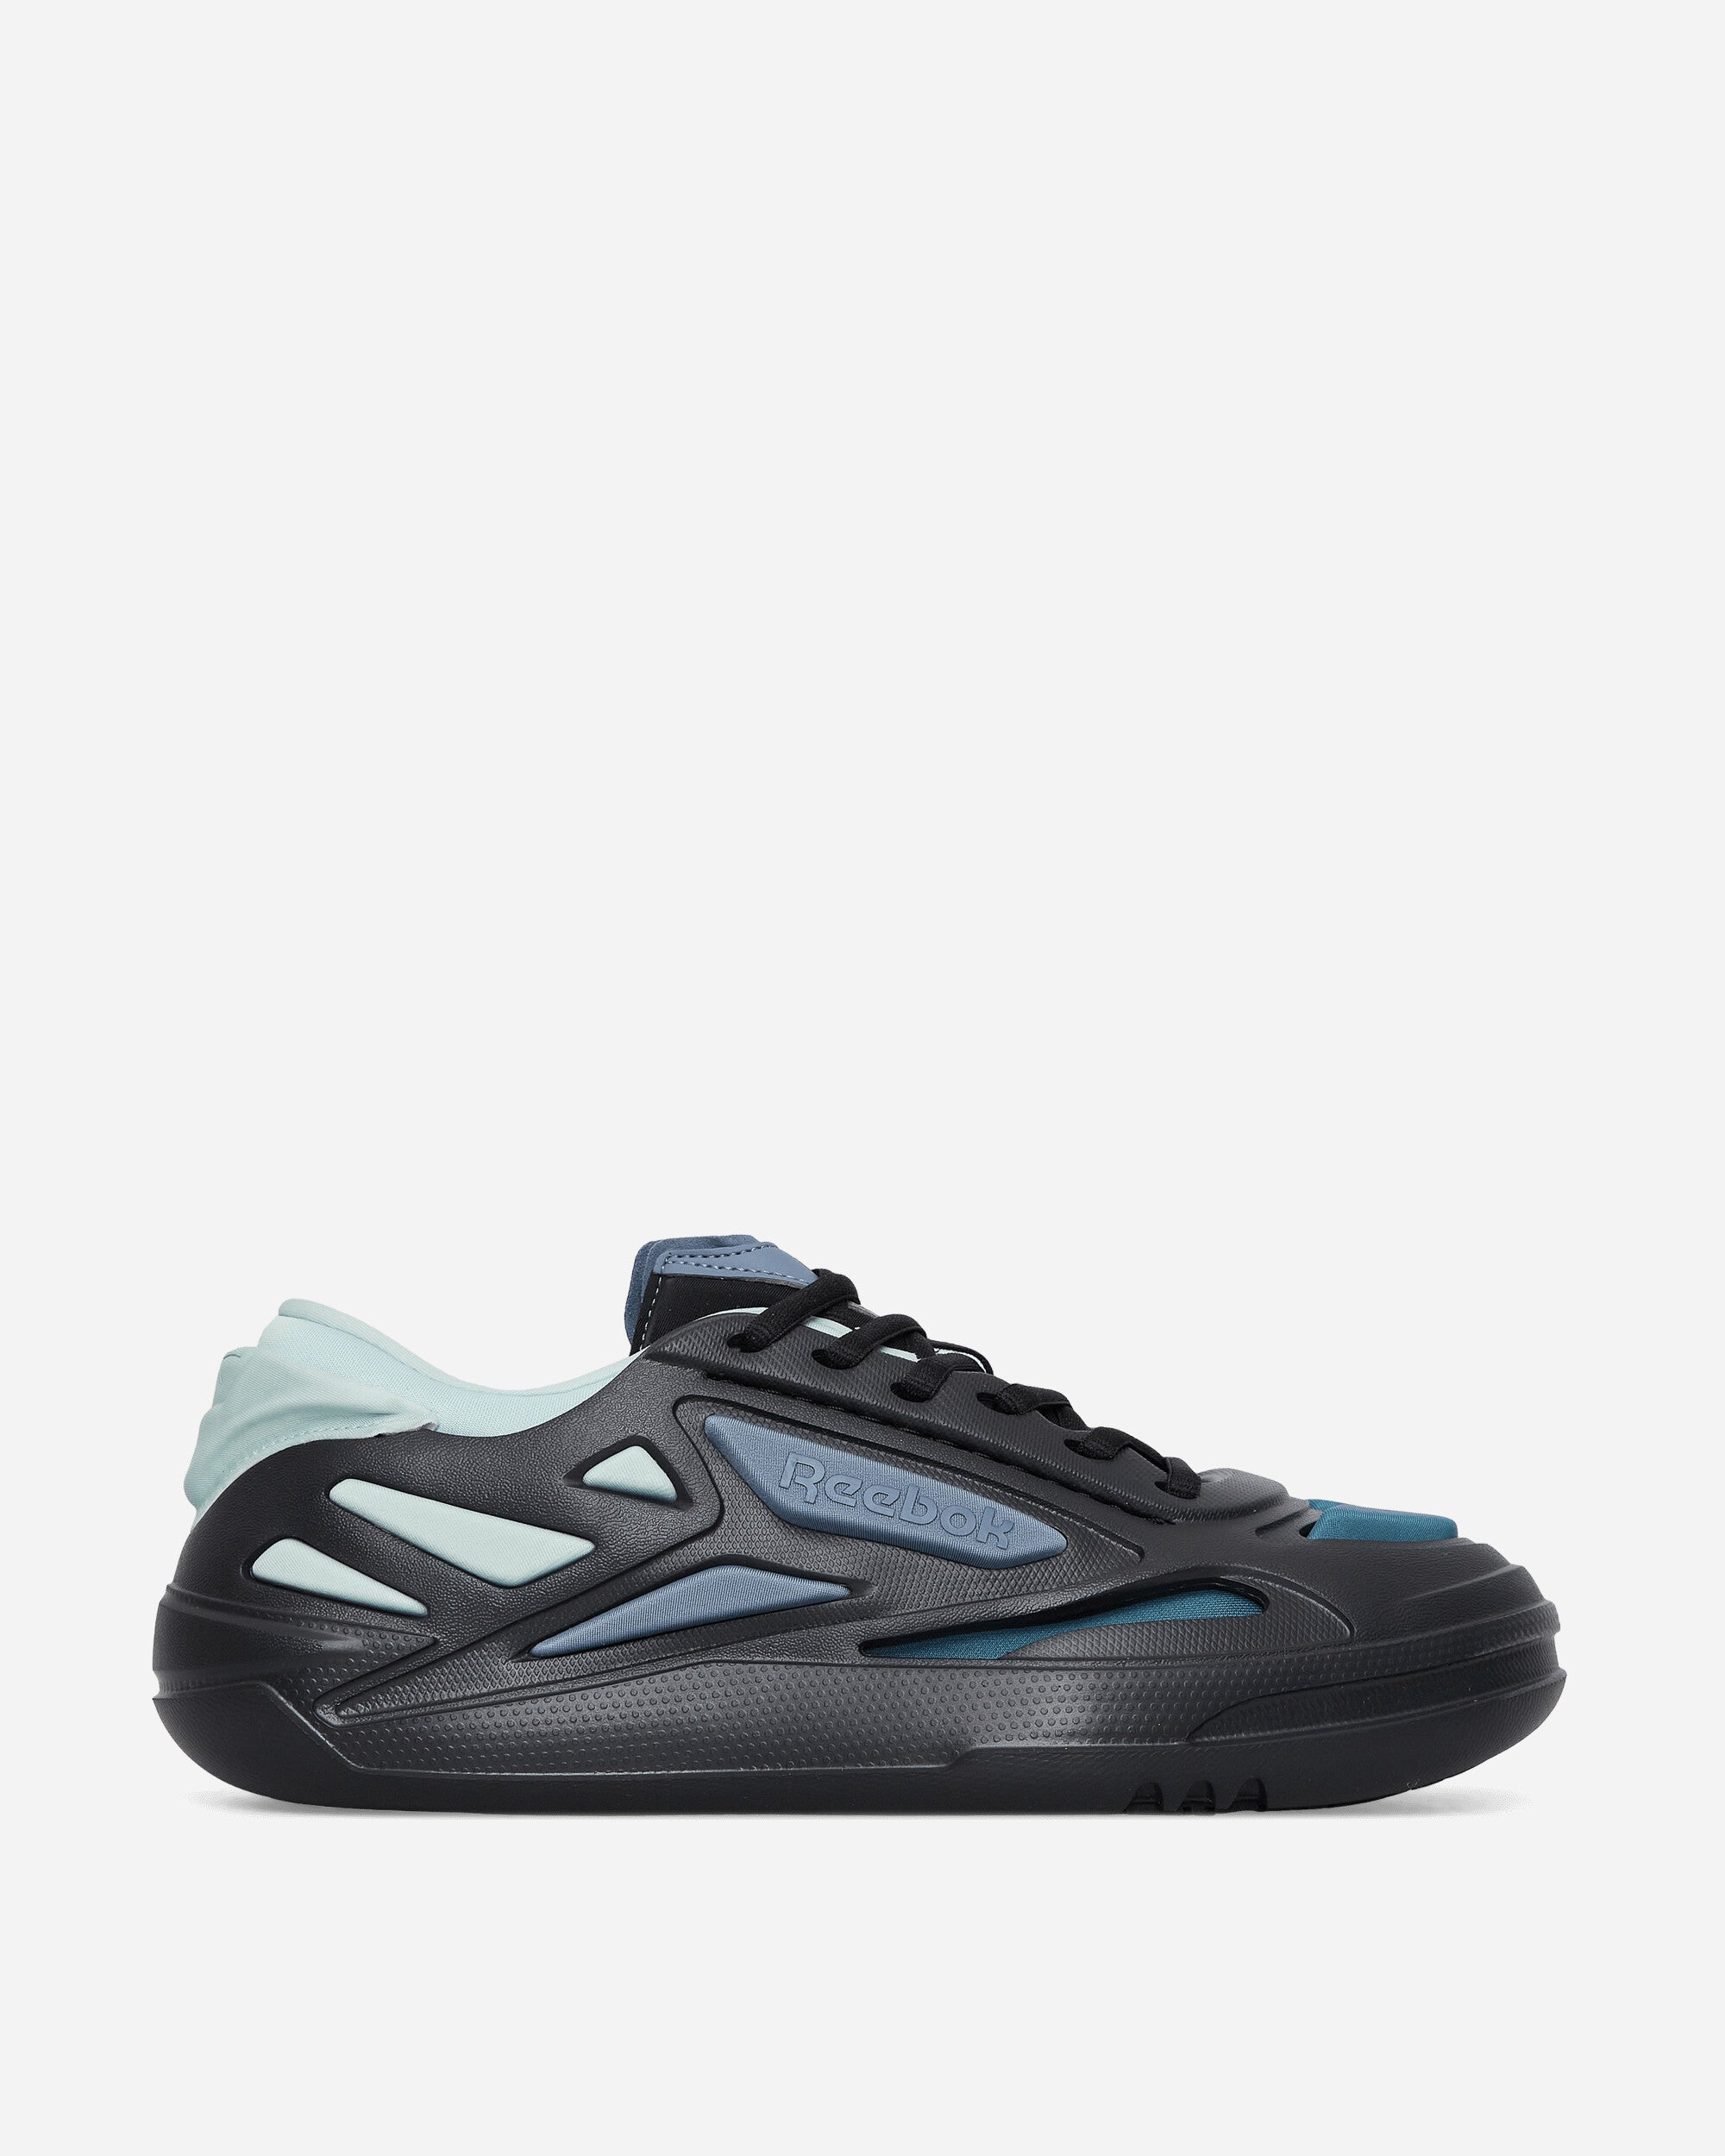 Future Club C Sneakers Black / Dusty Blue